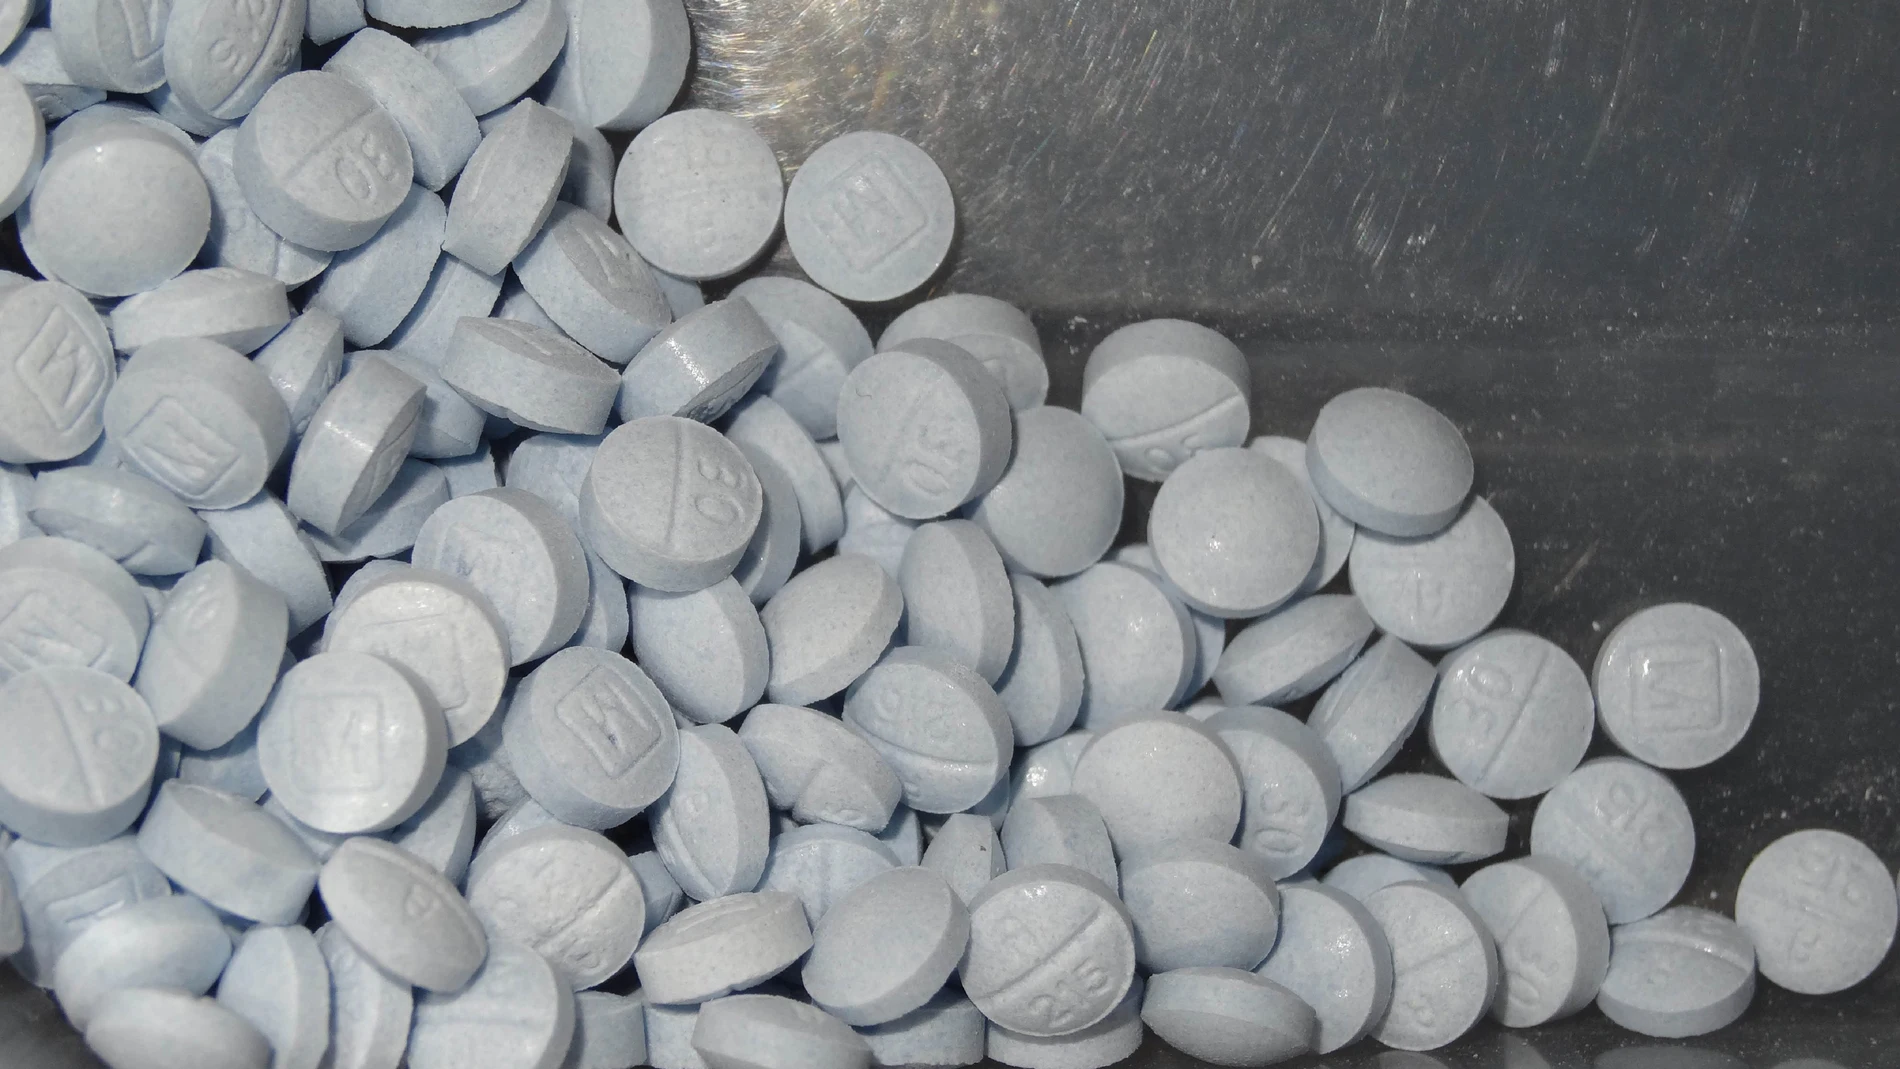  Fentanyl-laced oxycodone pills